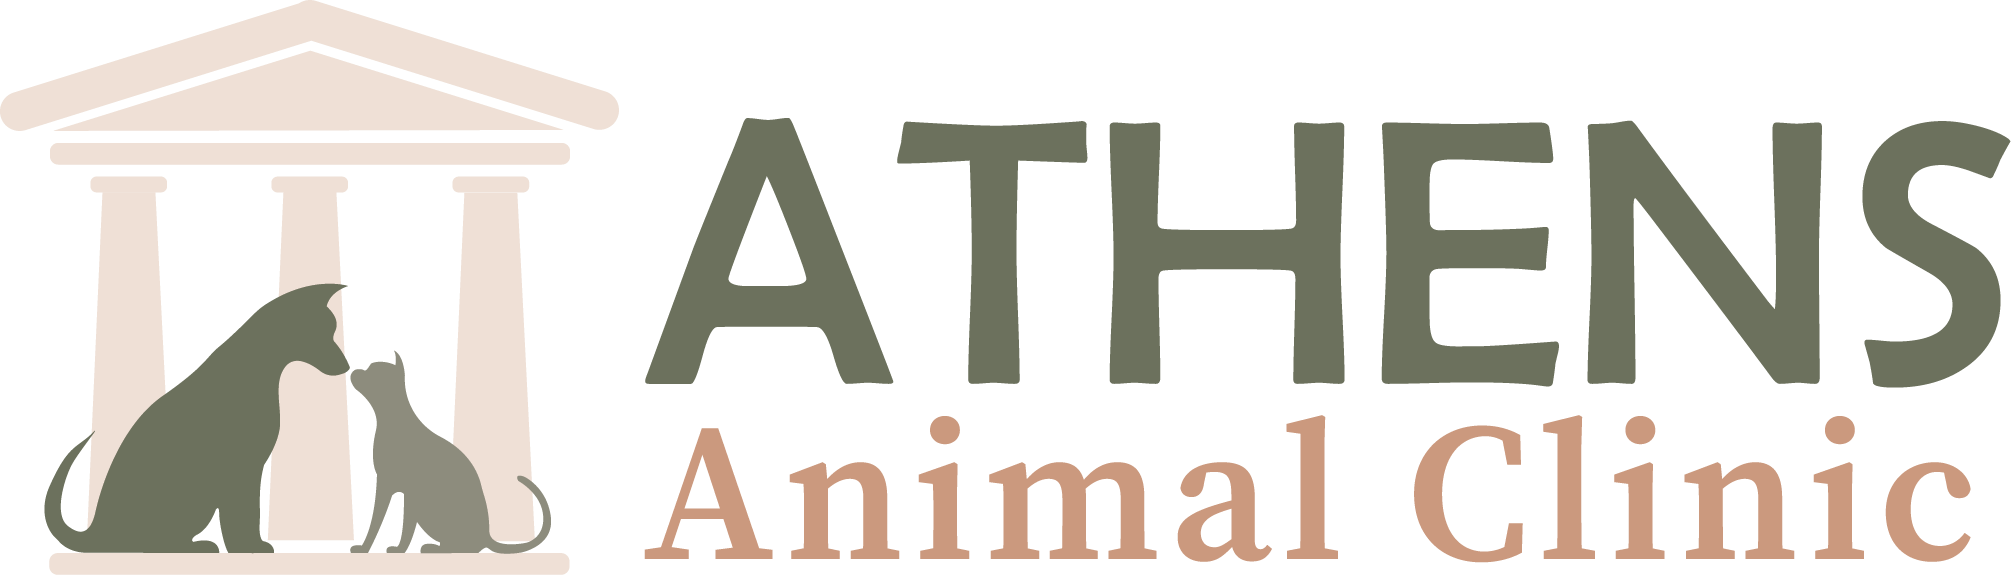 athens animal clinic